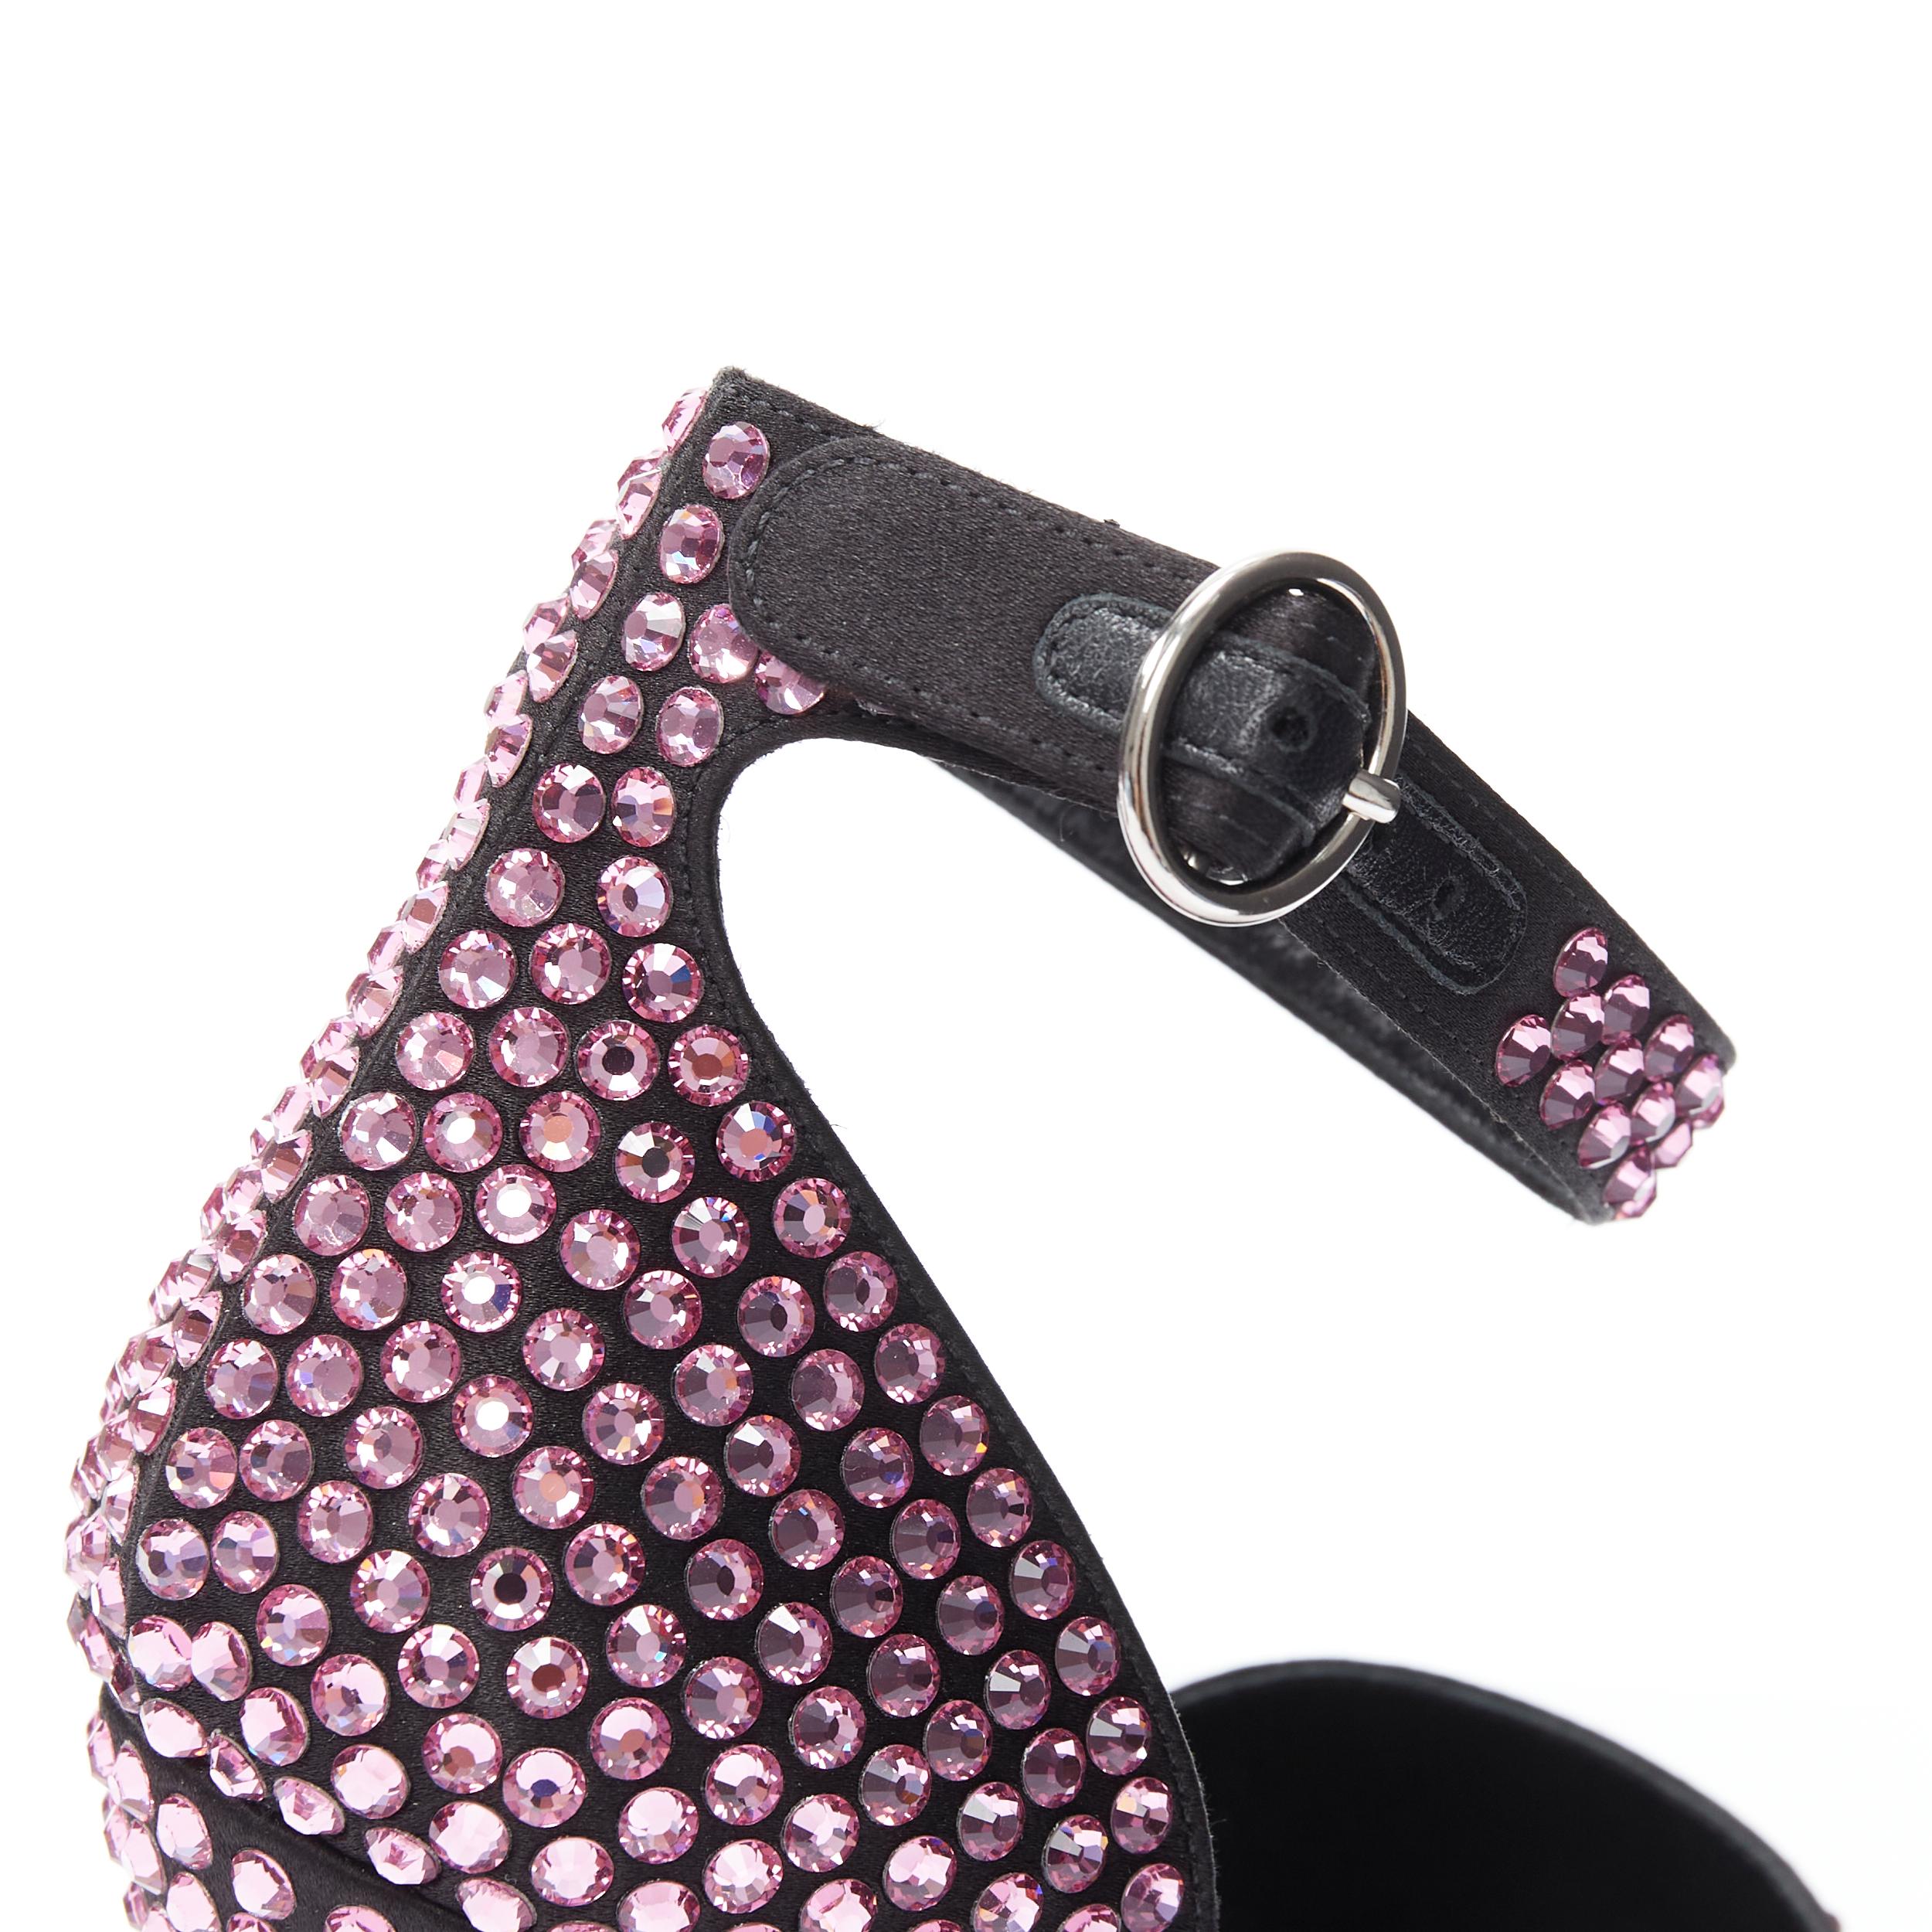 Women's new PRADA 2019 Runway pink crystal rhinestone encrusted high heel sandal EU38